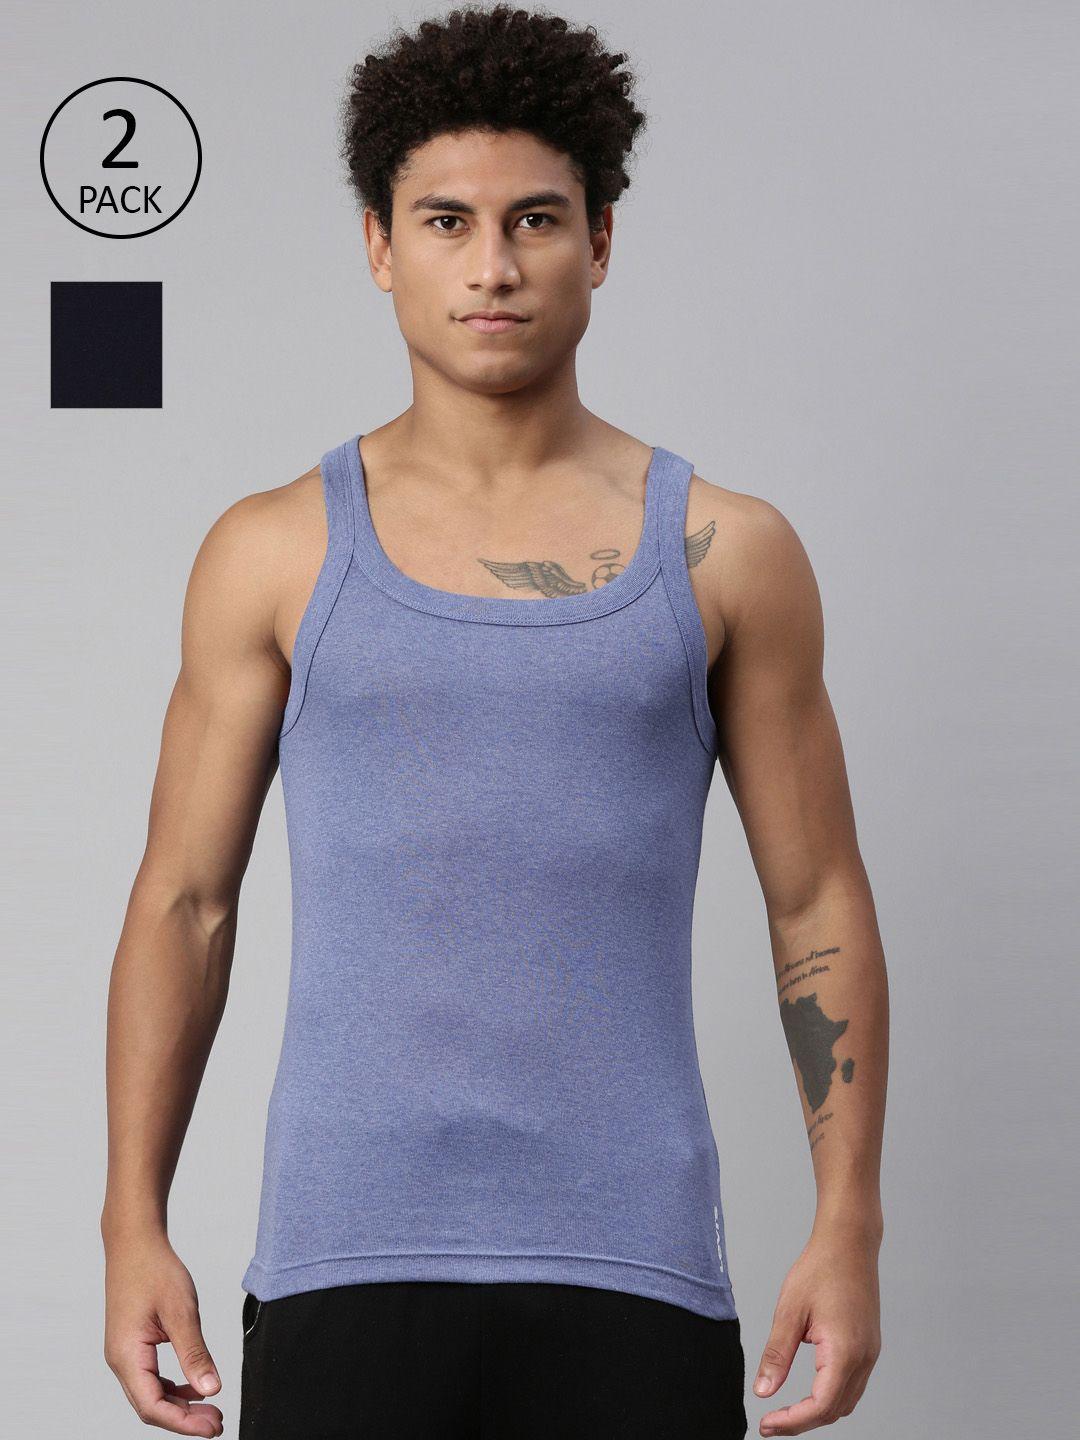 levis-men-pack-of-2-smartskin-technology-sports-vest-with-tag-free-comfort-#015